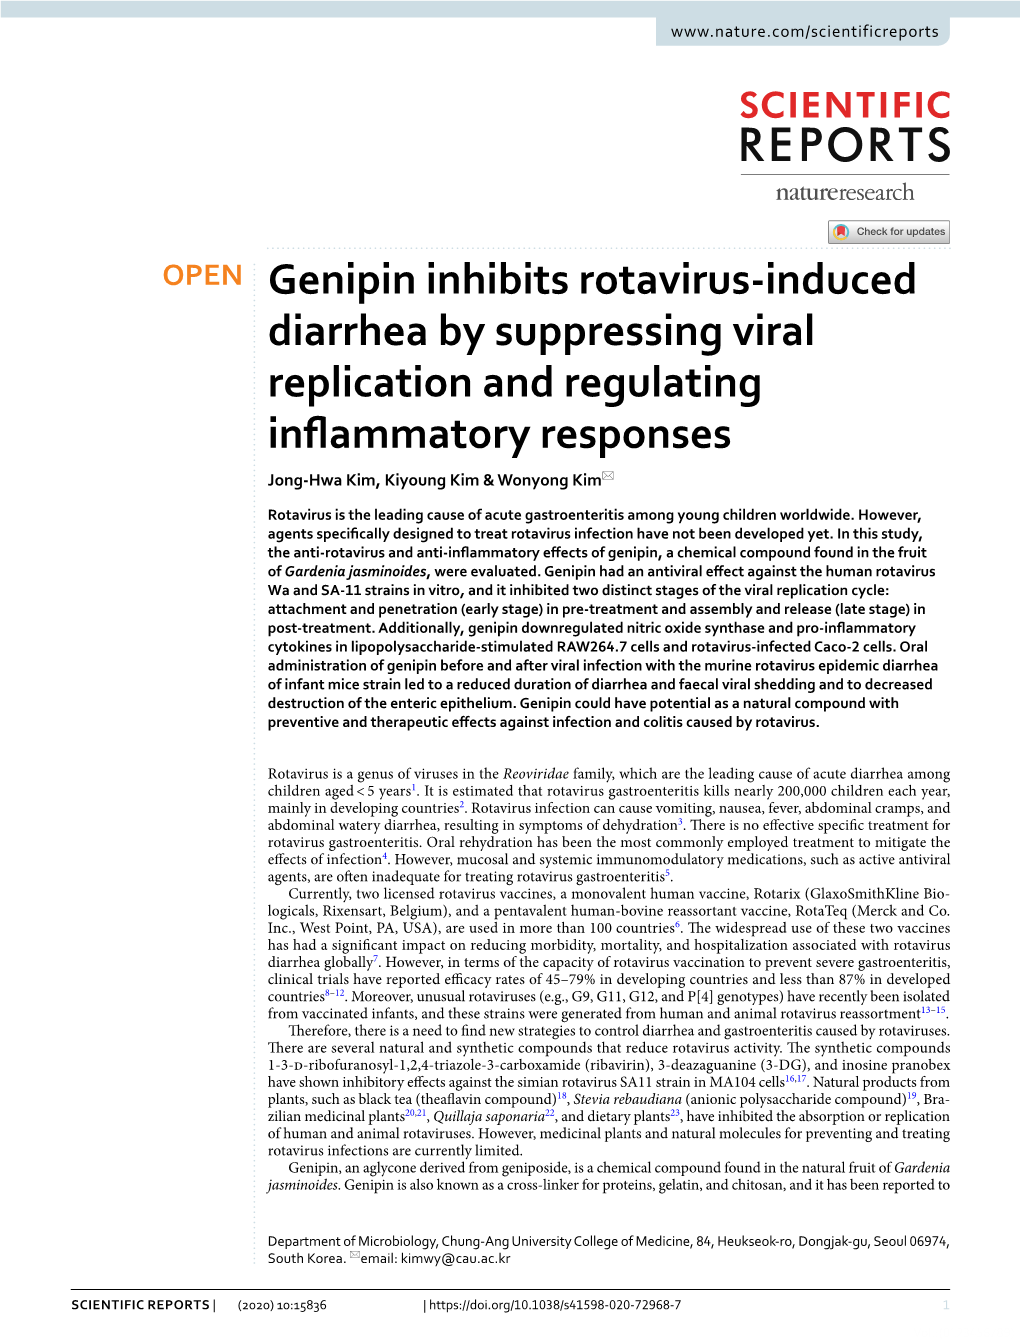 Genipin Inhibits Rotavirus-Induced Diarrhea by Suppressing Viral